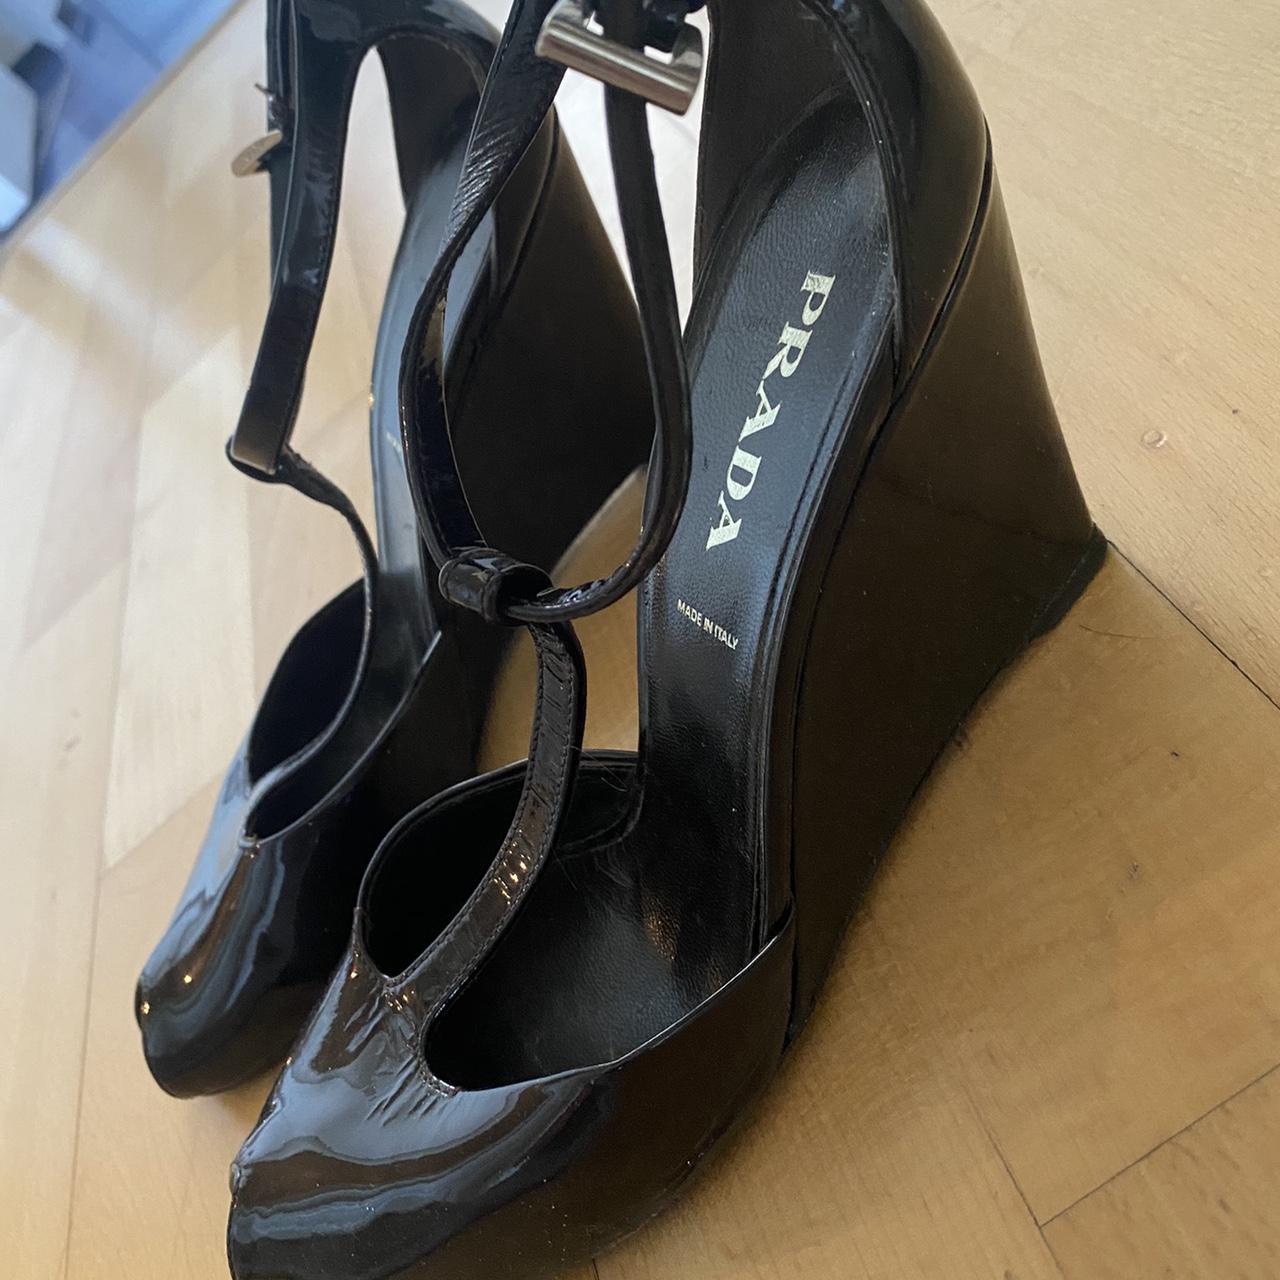 Patent leather Prada platform heels with strappy... - Depop